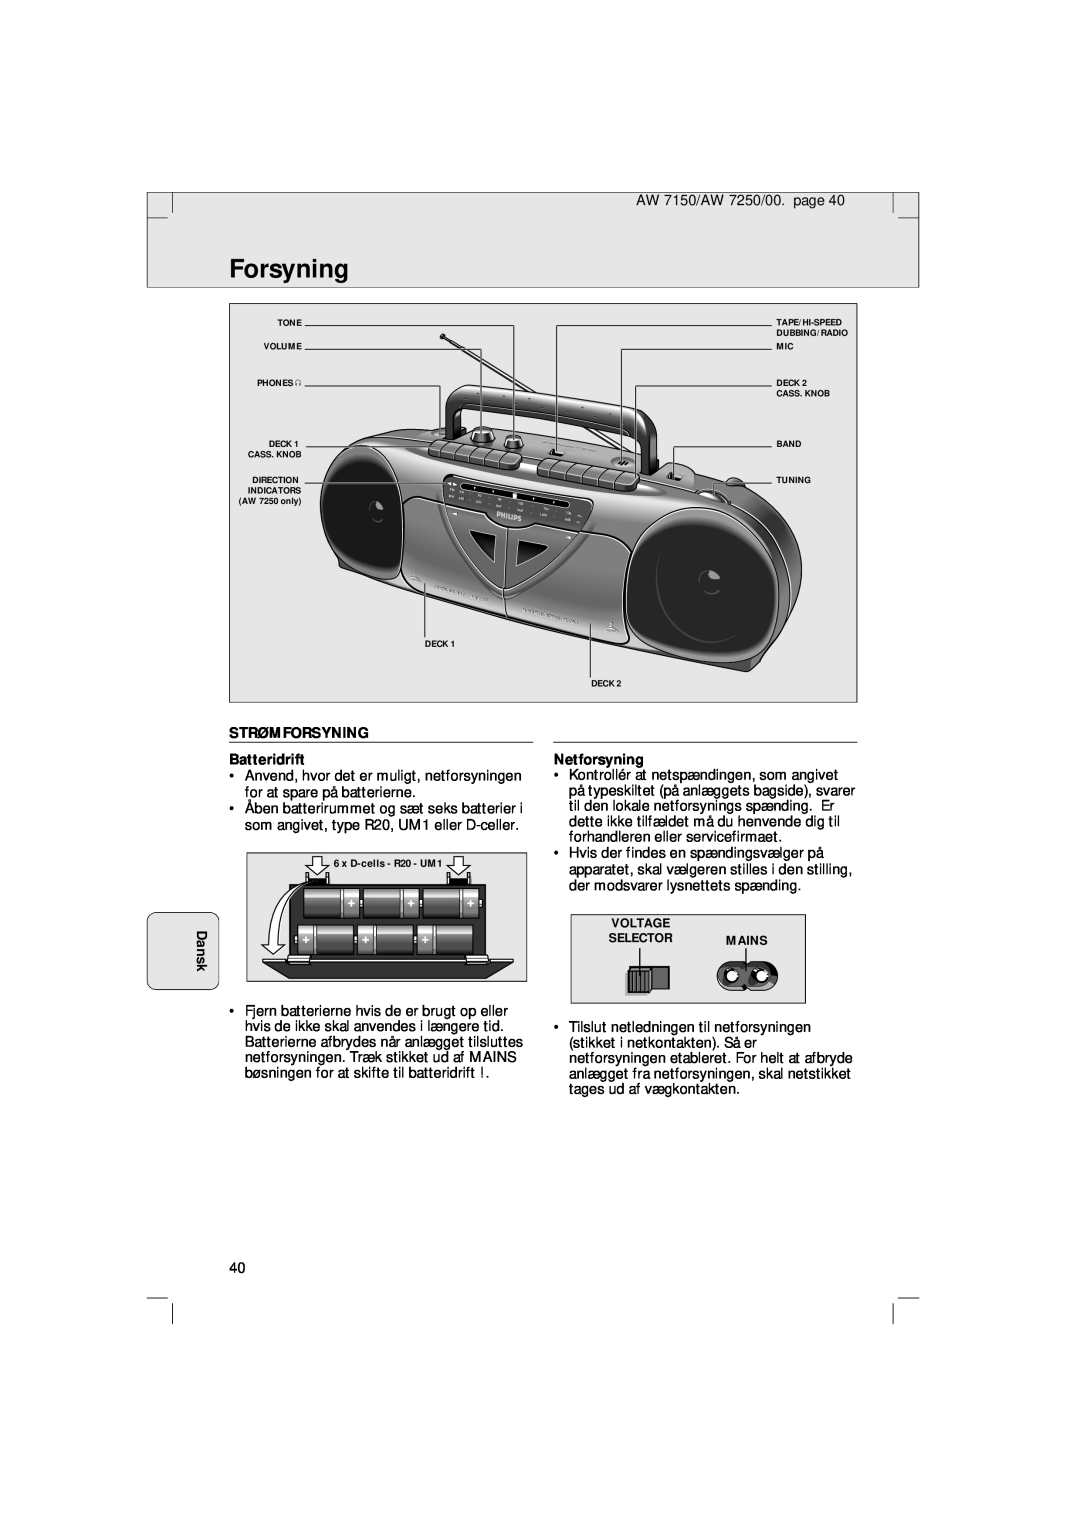 Philips AW 7150/04S, AW 7250/04S manual Forsyning, Dansk, STRØMFORSYNING Batteridrift, Netforsyning 